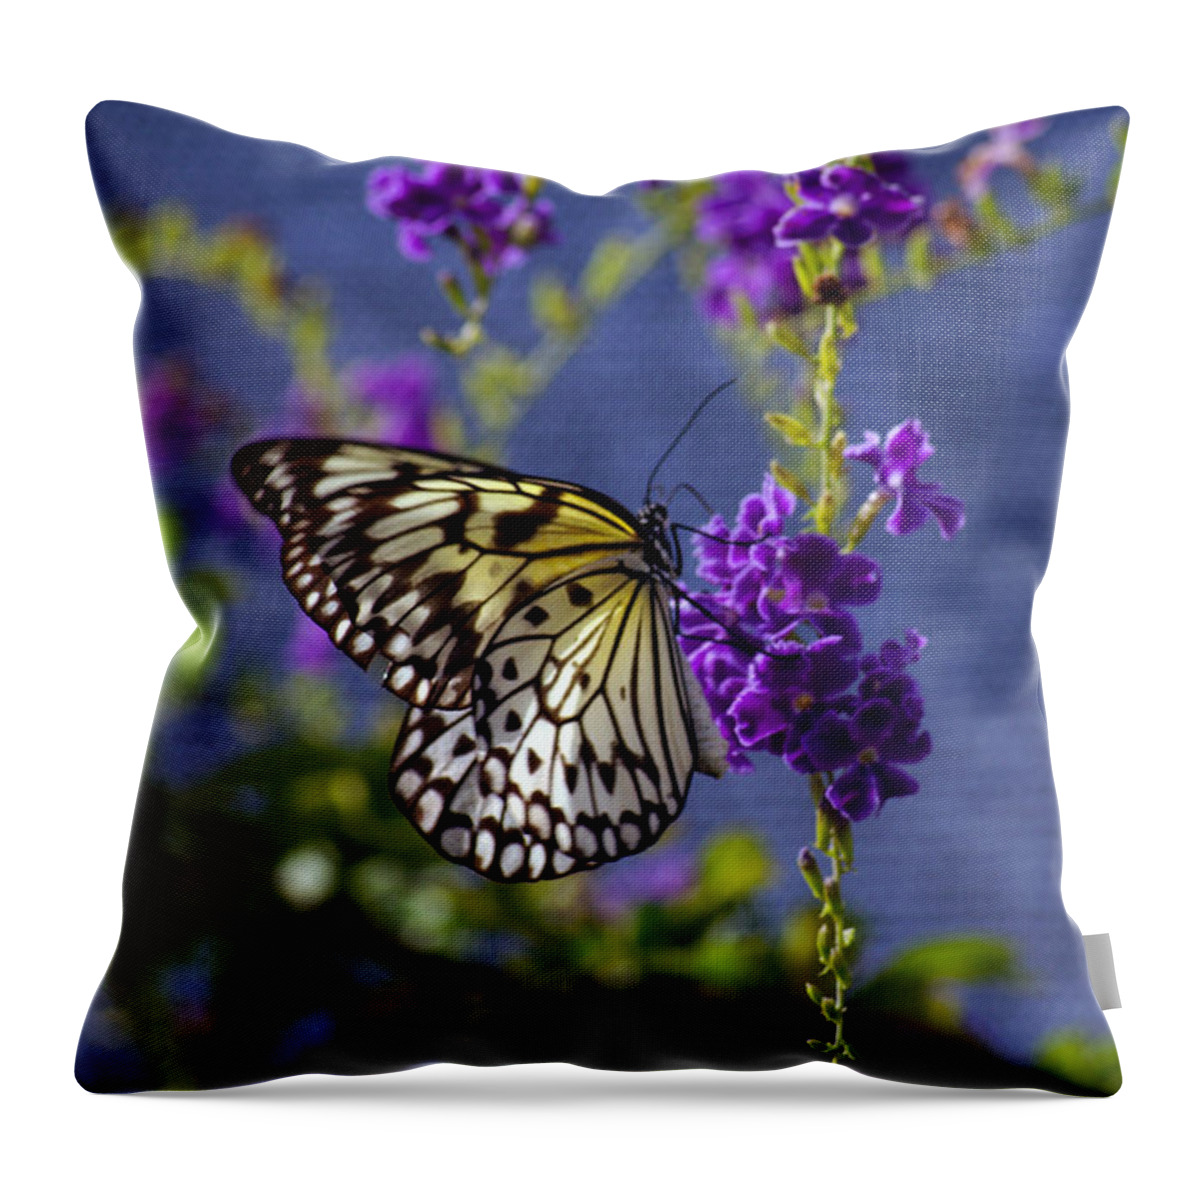 Butterfly Throw Pillow featuring the photograph Caribbean Butterfly by John Dauer